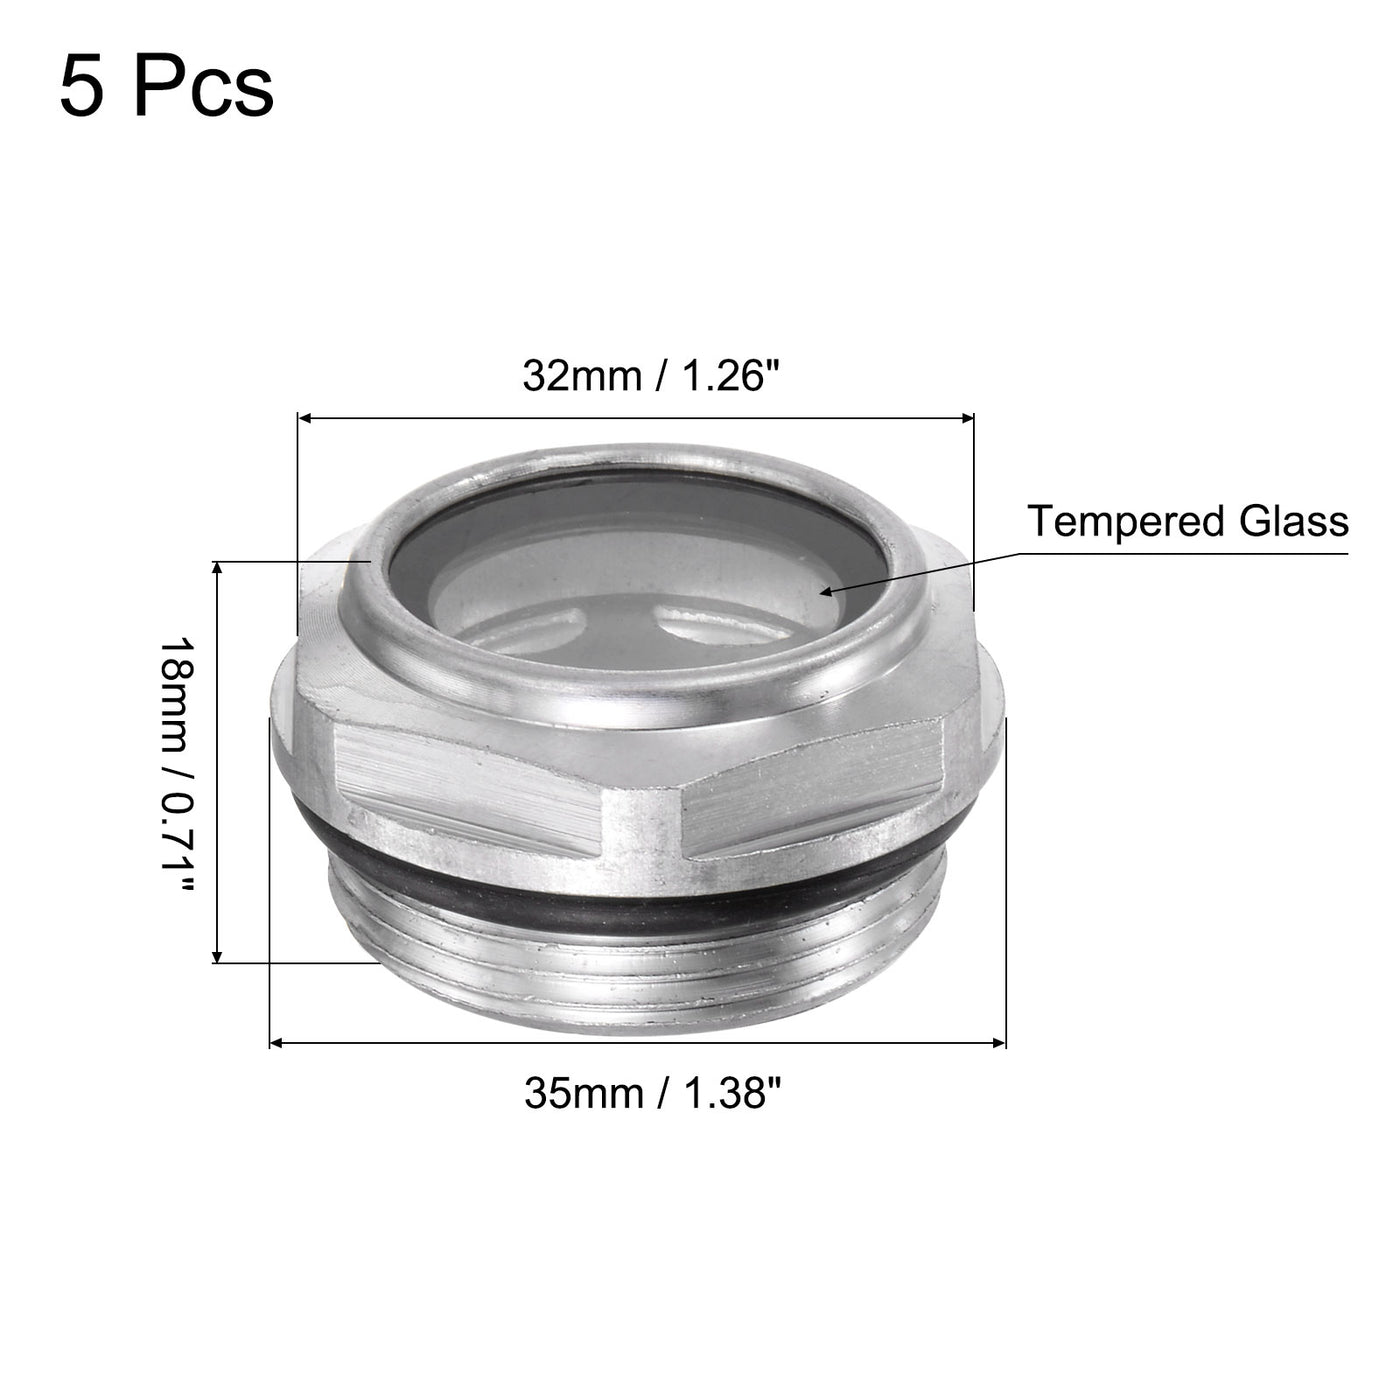 uxcell Uxcell Air Compressor Oil Level Gauge Sight Glass M30x1.5mm Male Thread Aluminum 5Pcs